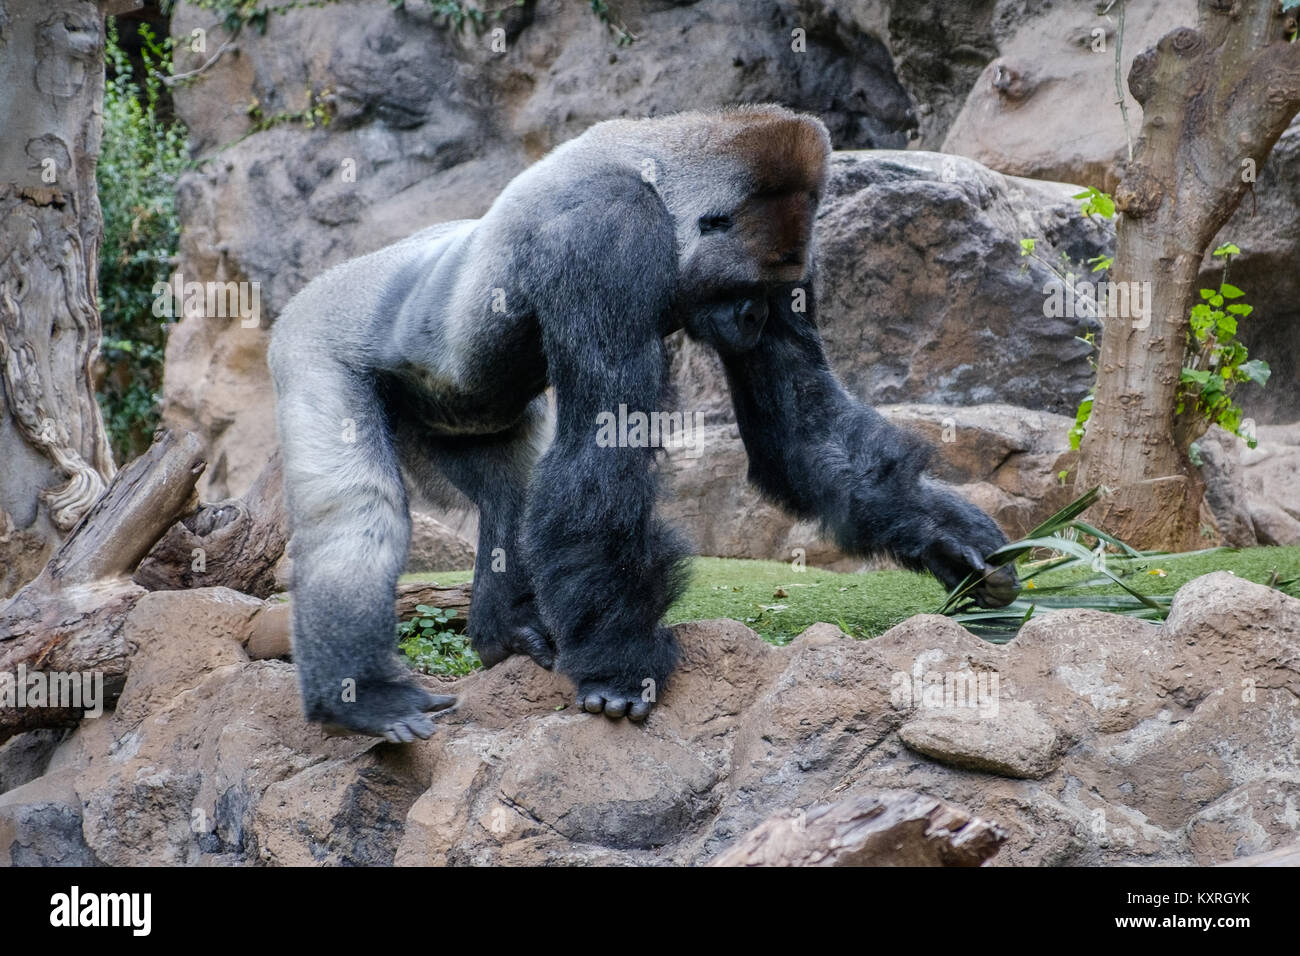 gorilla monkey , silverback gorilla in nature Stock Photo